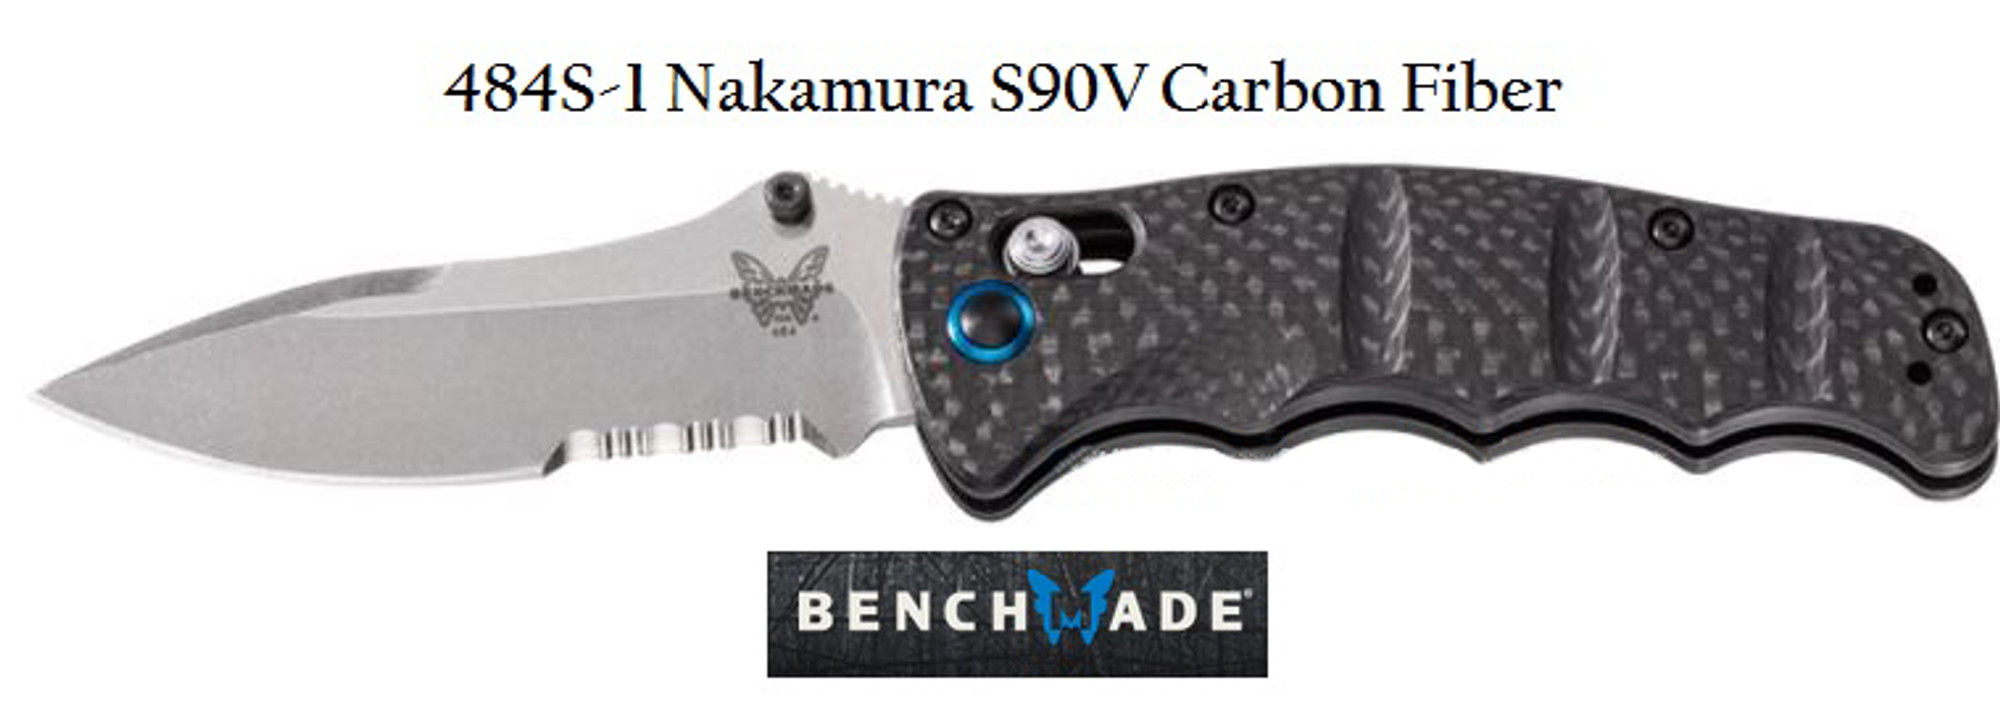 Benchmade 484S-1 Nakamura w/Serration S90V Carbon Fiber